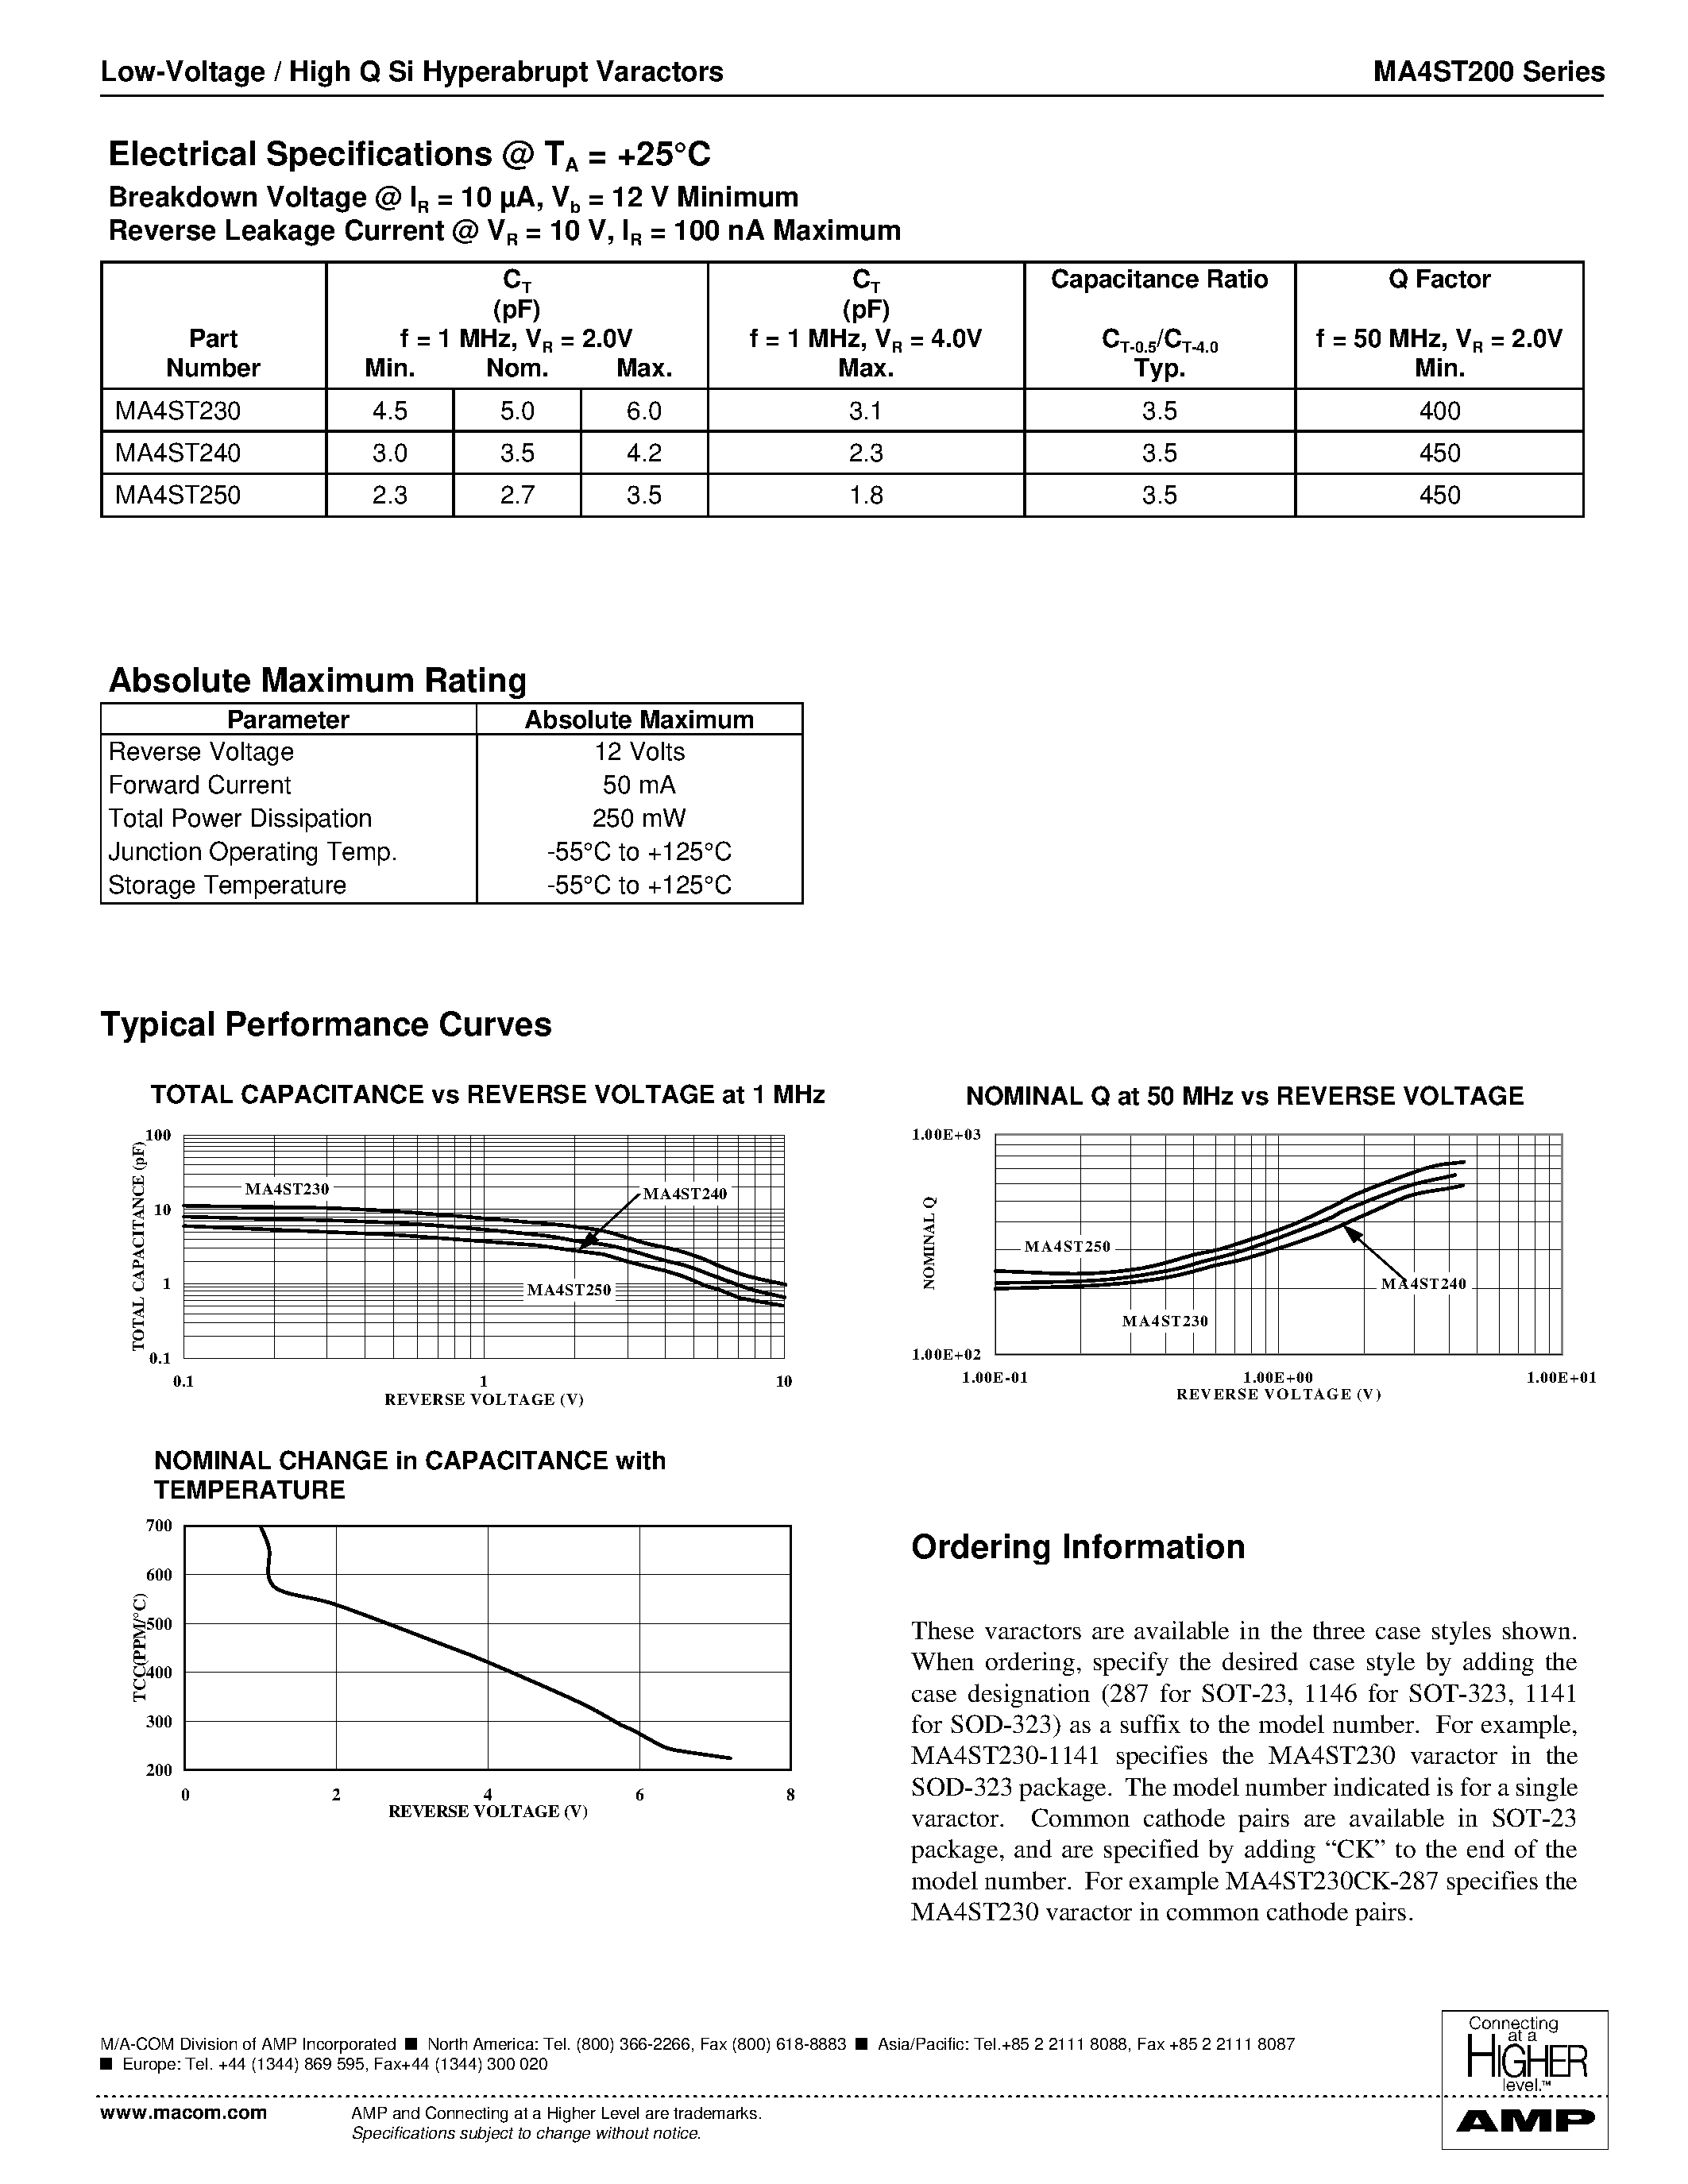 Даташит MA4ST200 - Low-Voltage / High Q Si Hyperabrupt Varactors страница 2